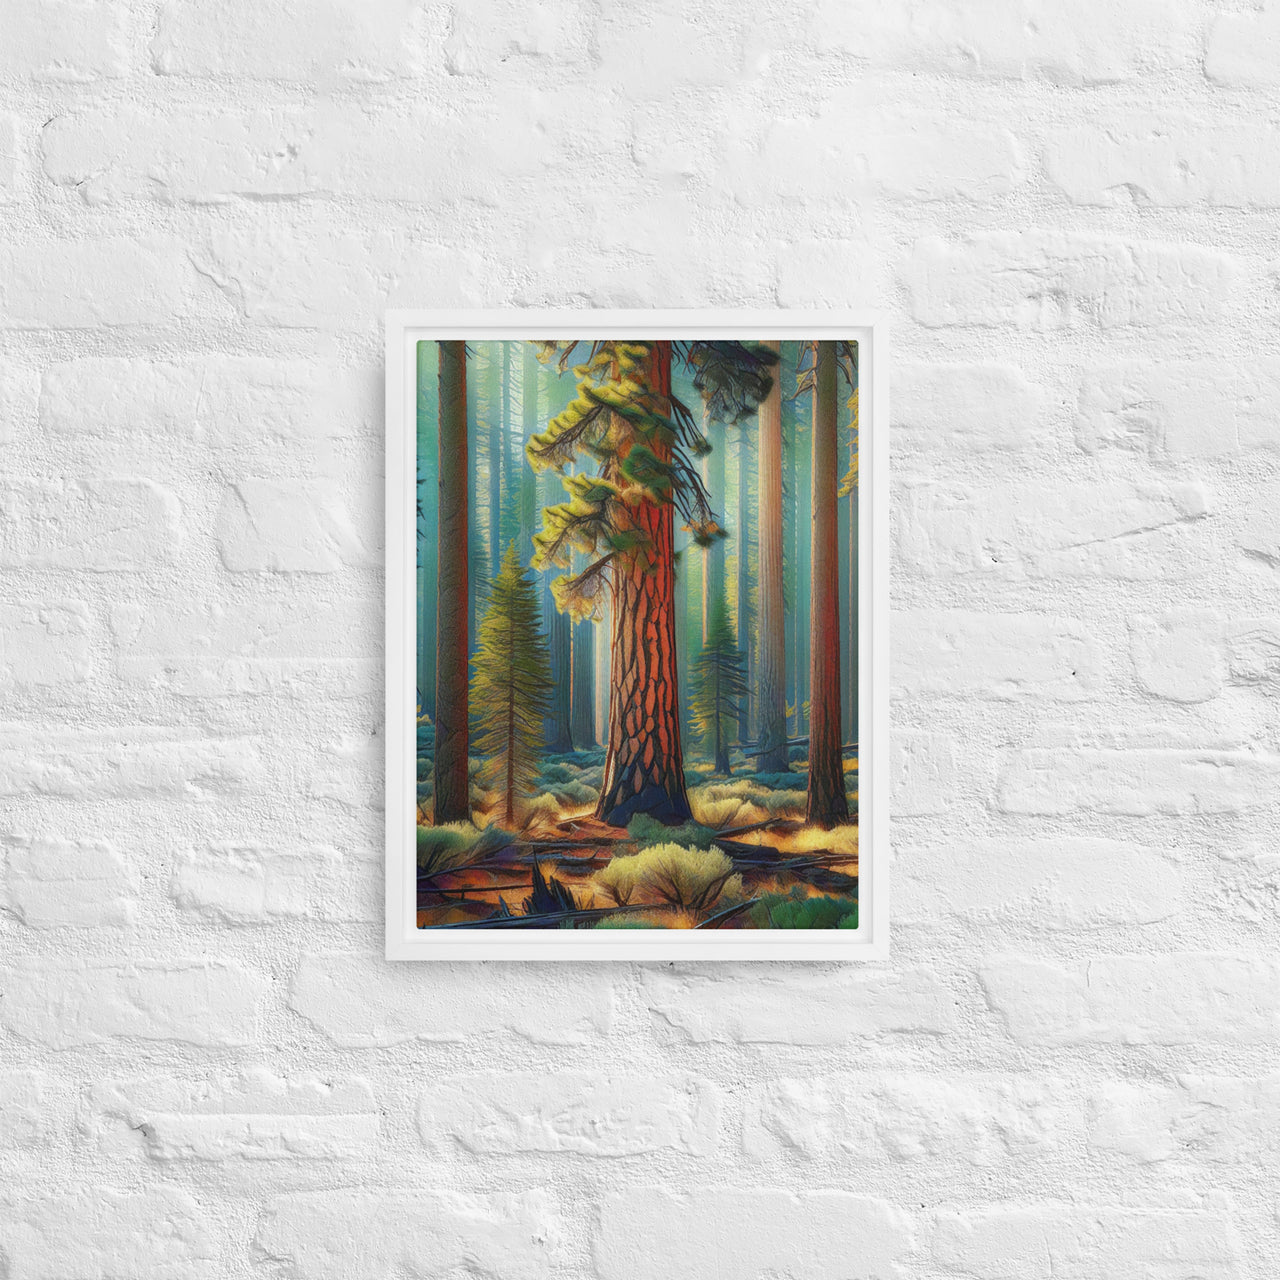 Ponderosa Pine - Digital Art - Framed canvas - FREE SHIPPING